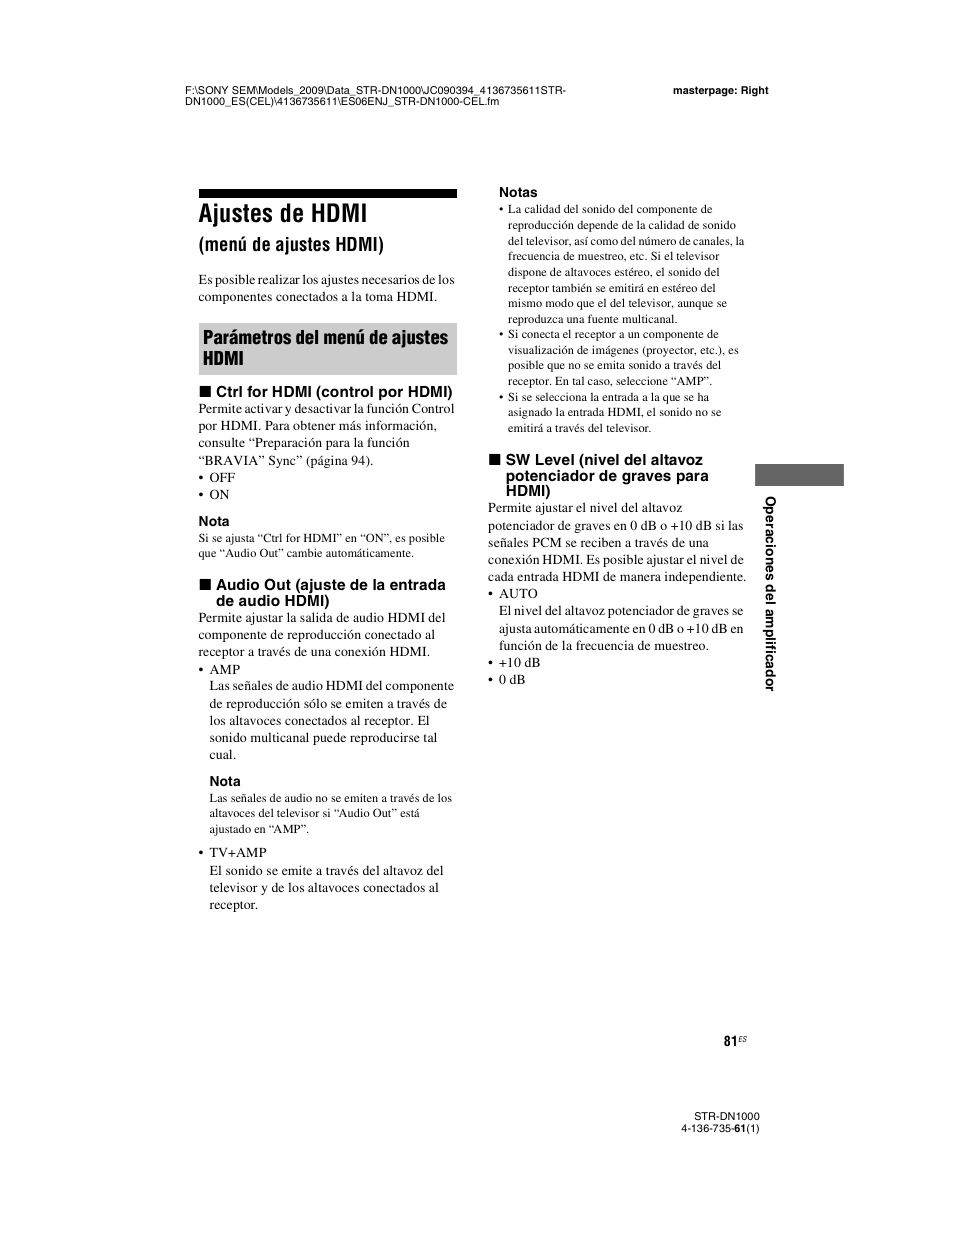 Ajustes de hdmi (menú de ajustes hdmi), Ajustes de hdmi, Menú de ajustes hdmi) | Parámetros del menú de ajustes hdmi | Sony STR-DN1000 Manual del usuario | Página 81 / 144